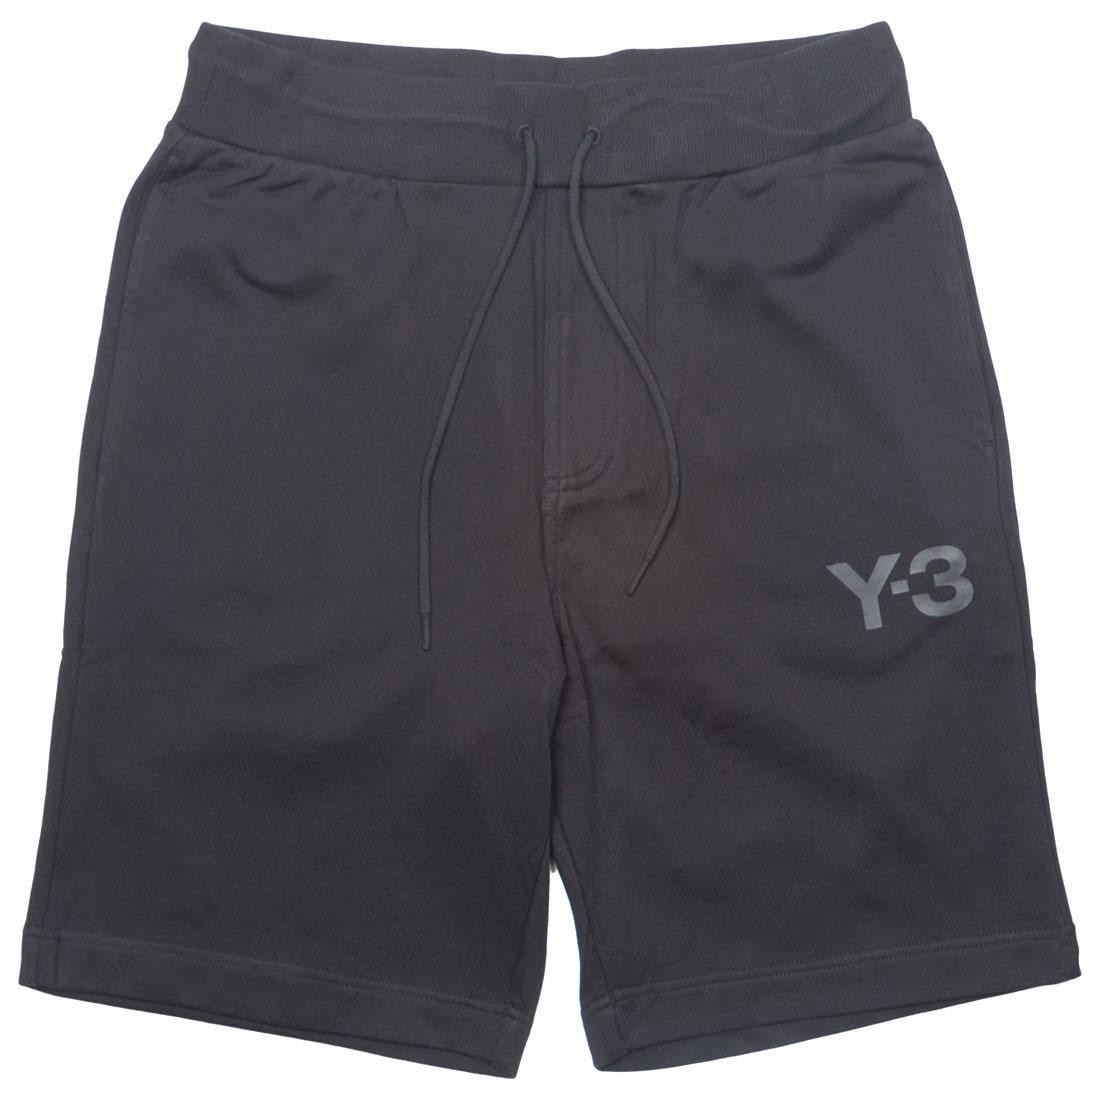 Adidas Y-3 Men Classic Shorts black